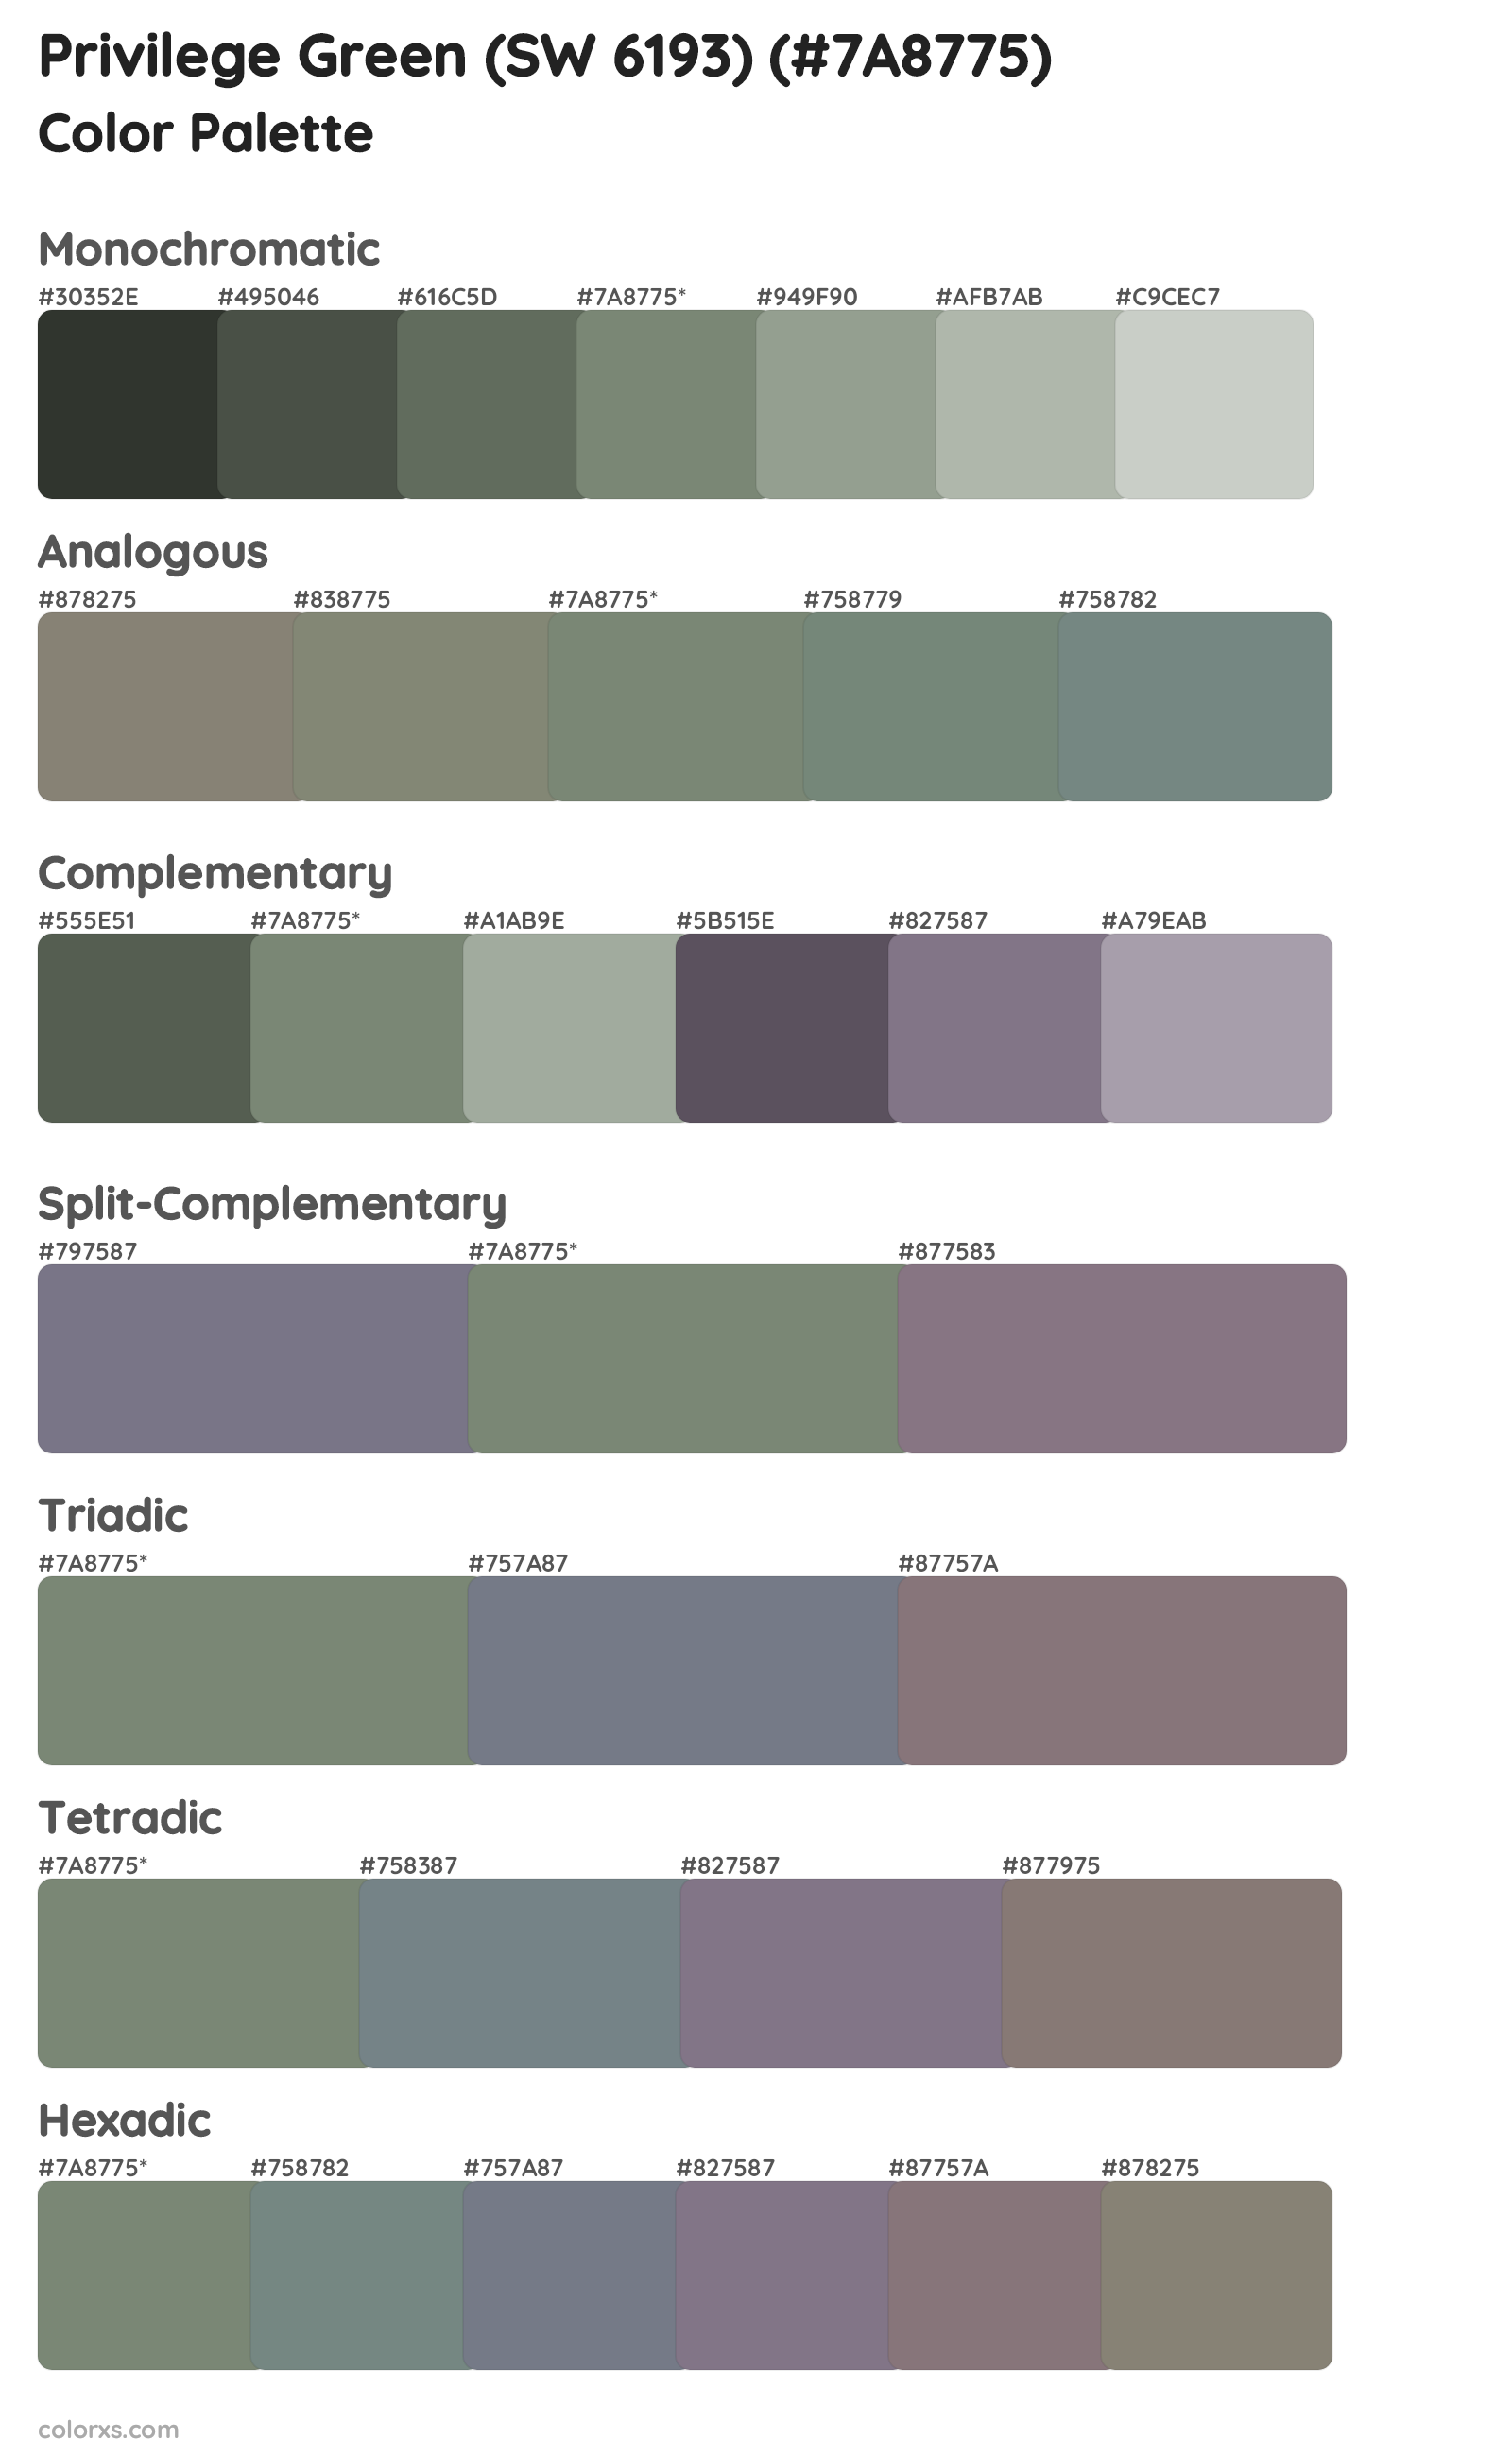 Privilege Green (SW 6193) Color Scheme Palettes